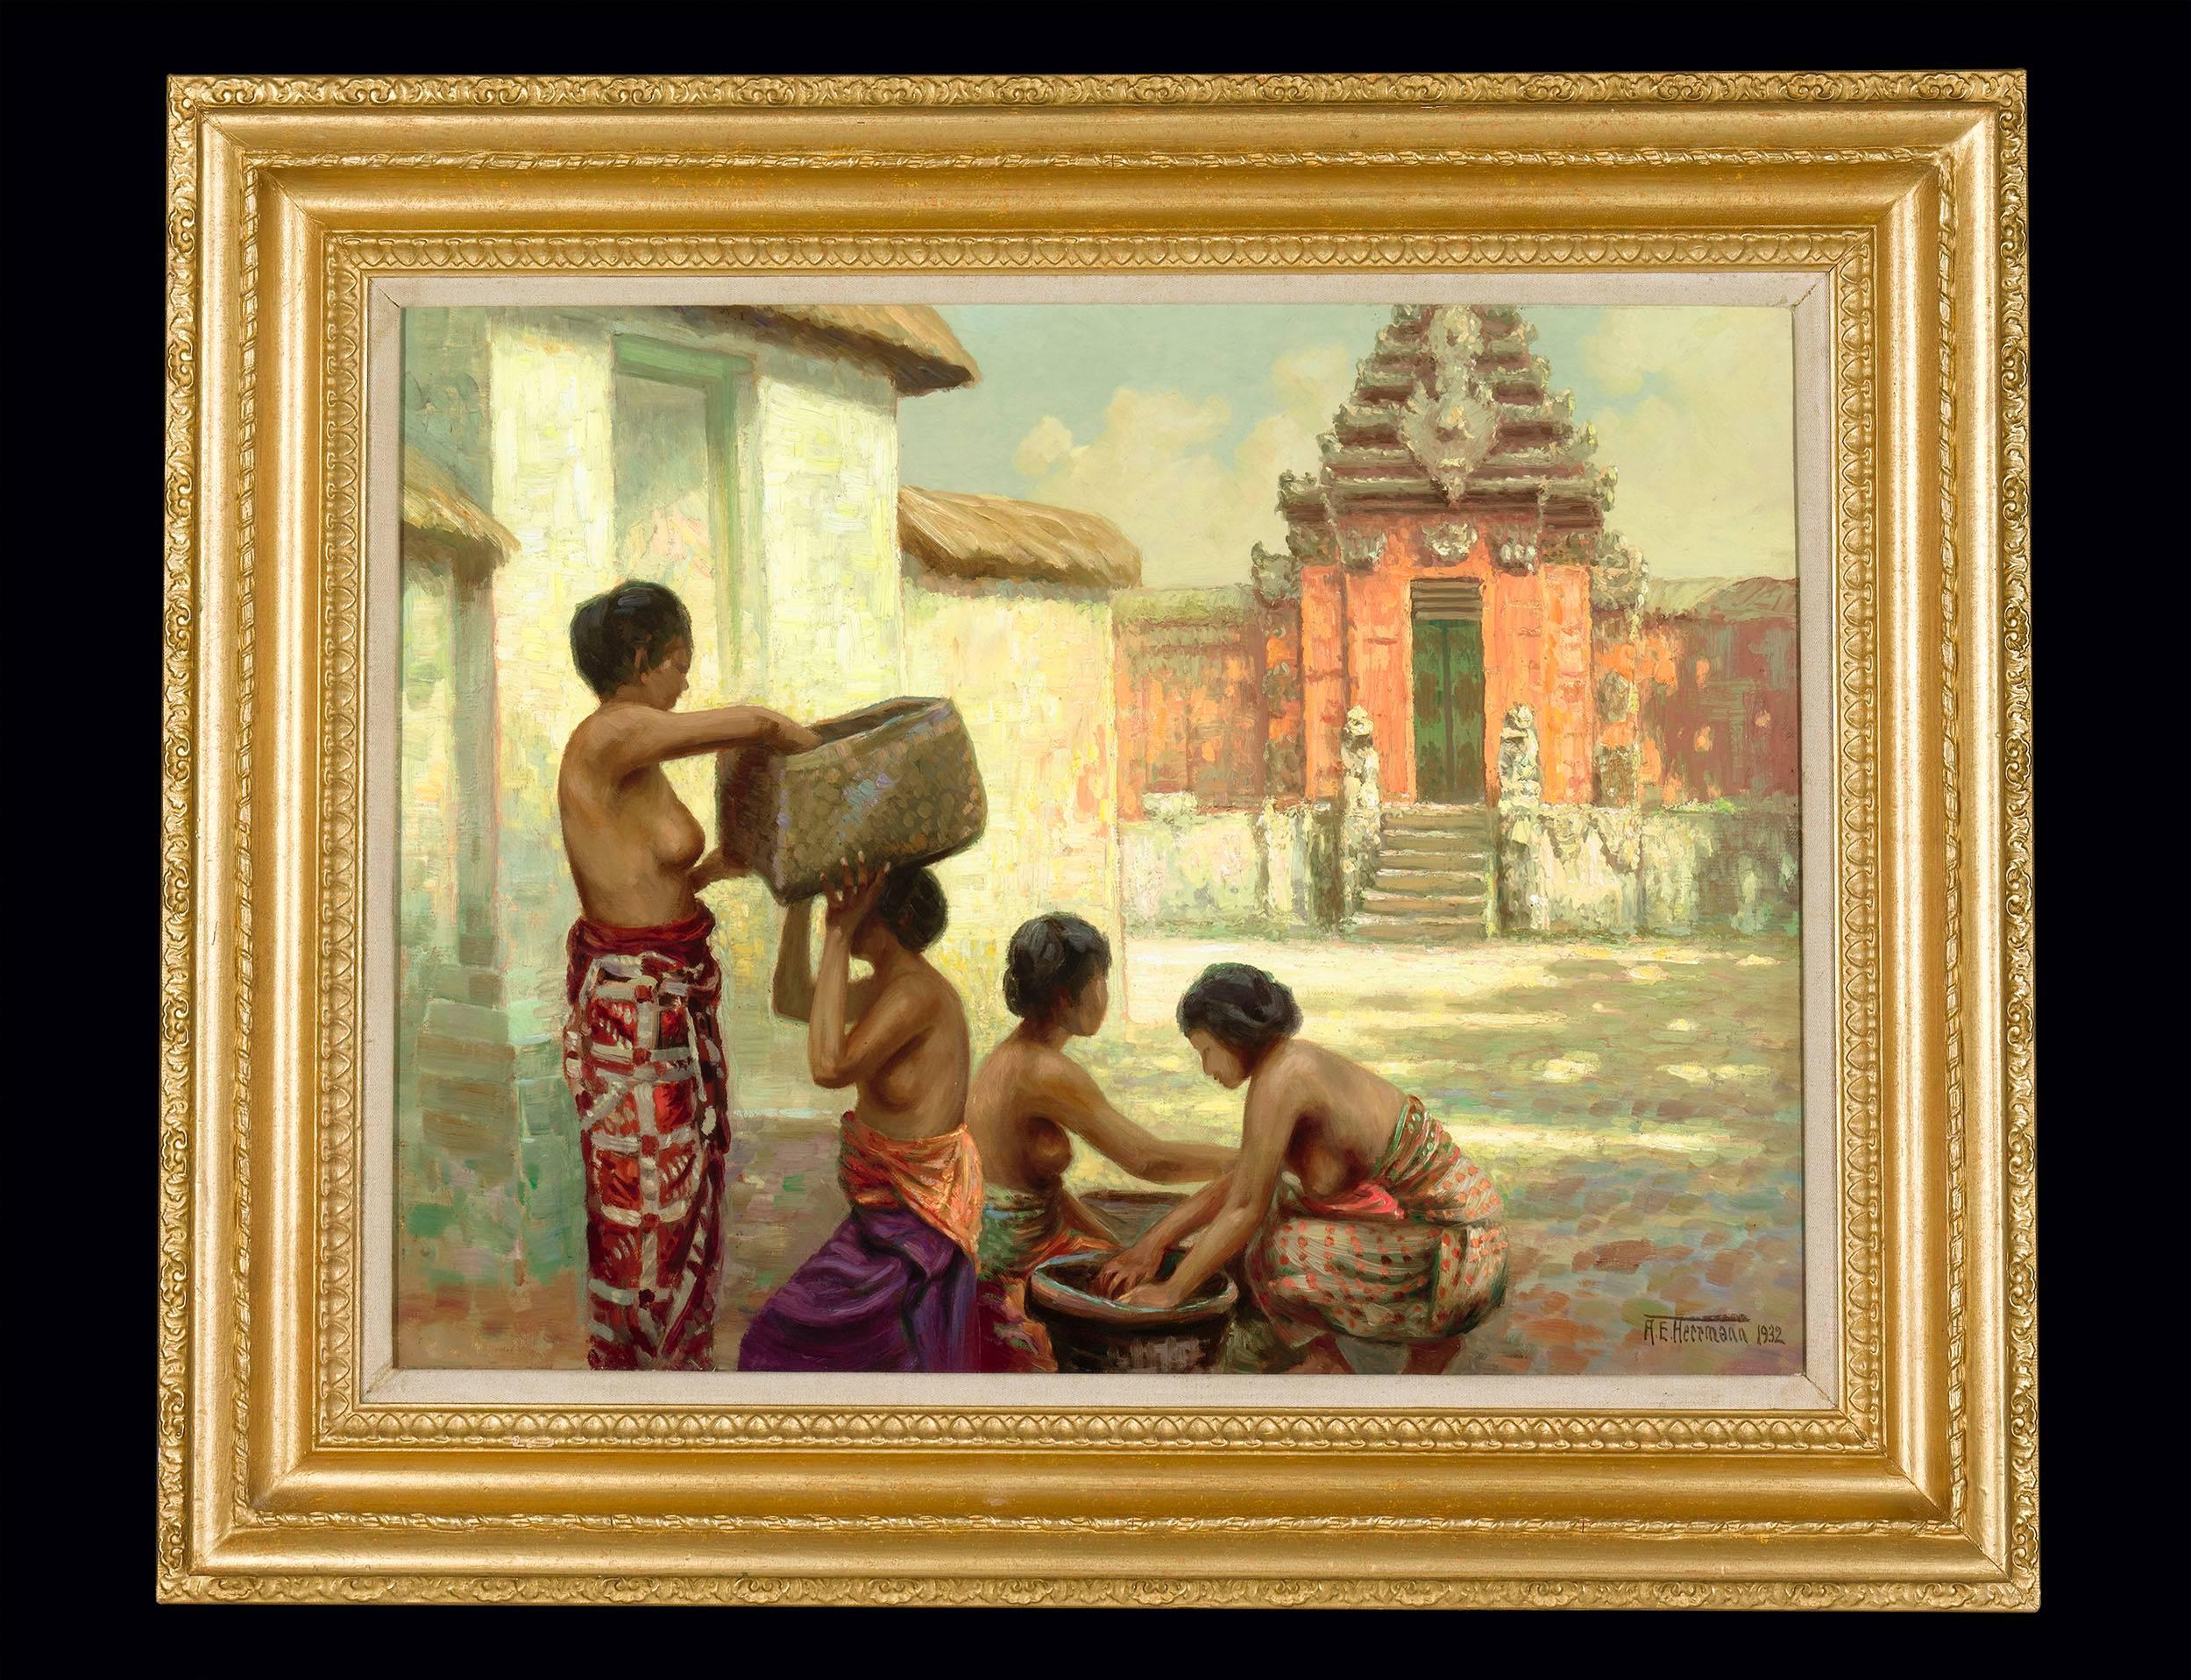 Bali von A. E. Herrmann – Painting von A.E. Herrmann